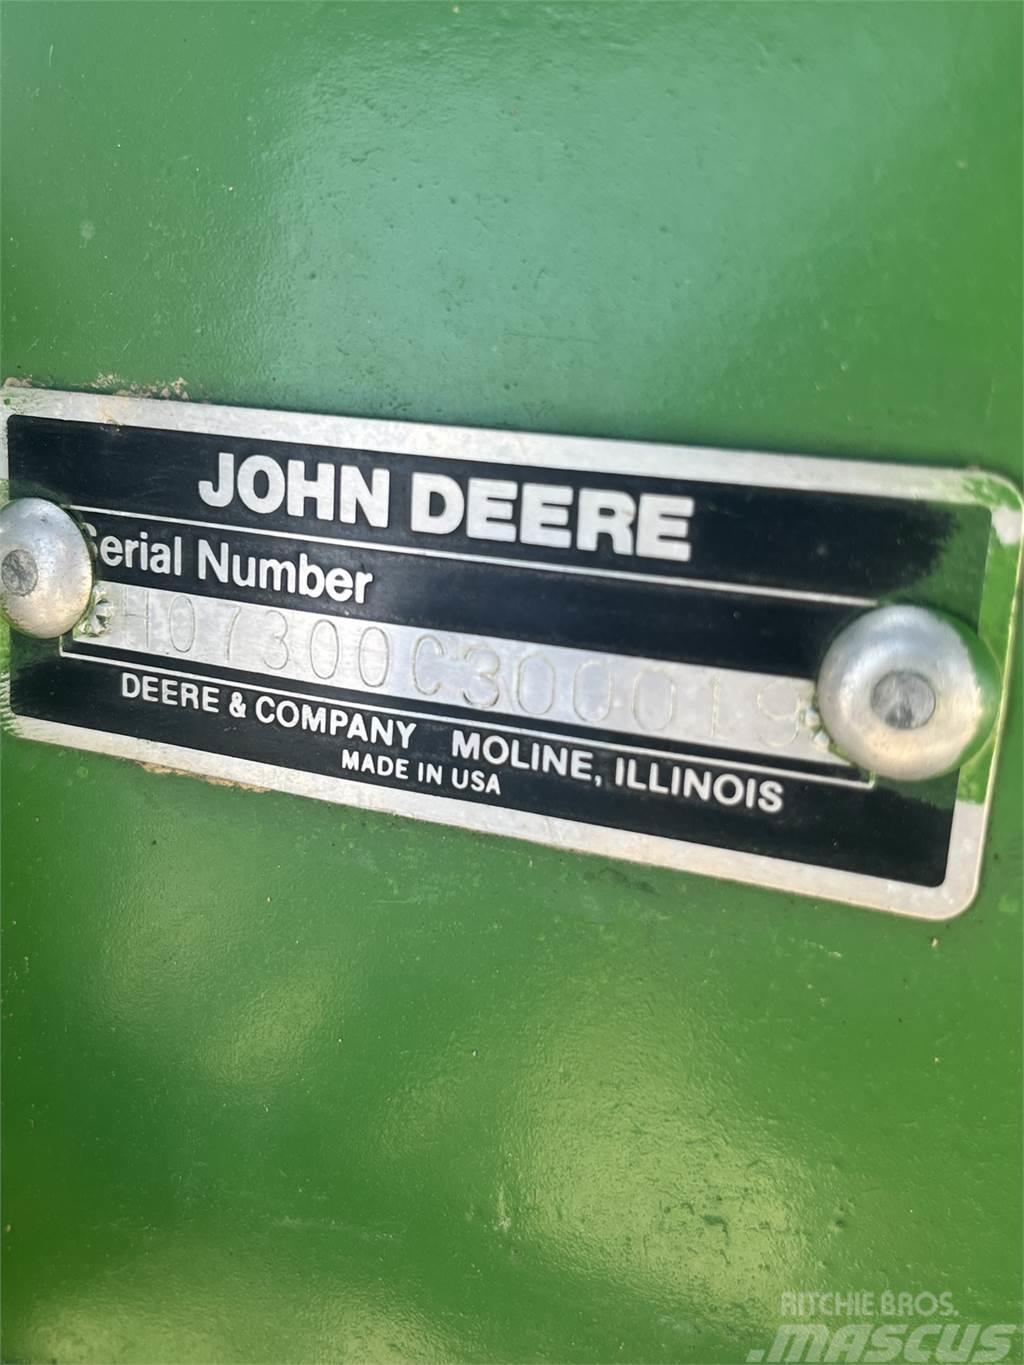 John Deere 7300 Trapiantatrici